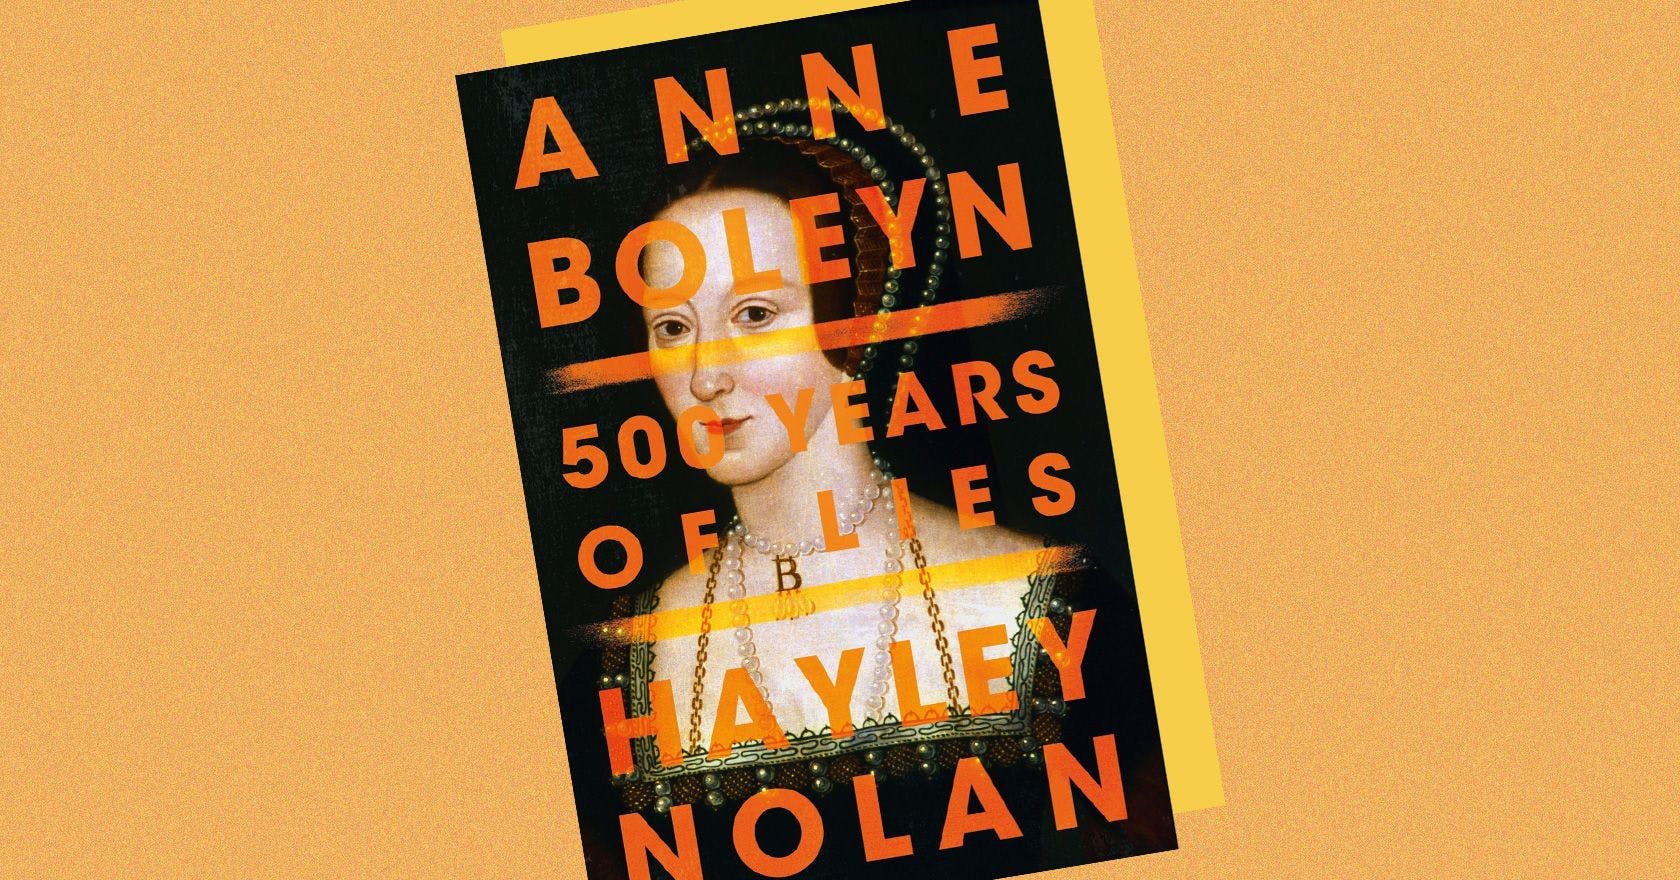 Anne Boleyn: 500 Years of Lies, by Hayley Nolan - Anne Boleyn 500 Years Of Lies